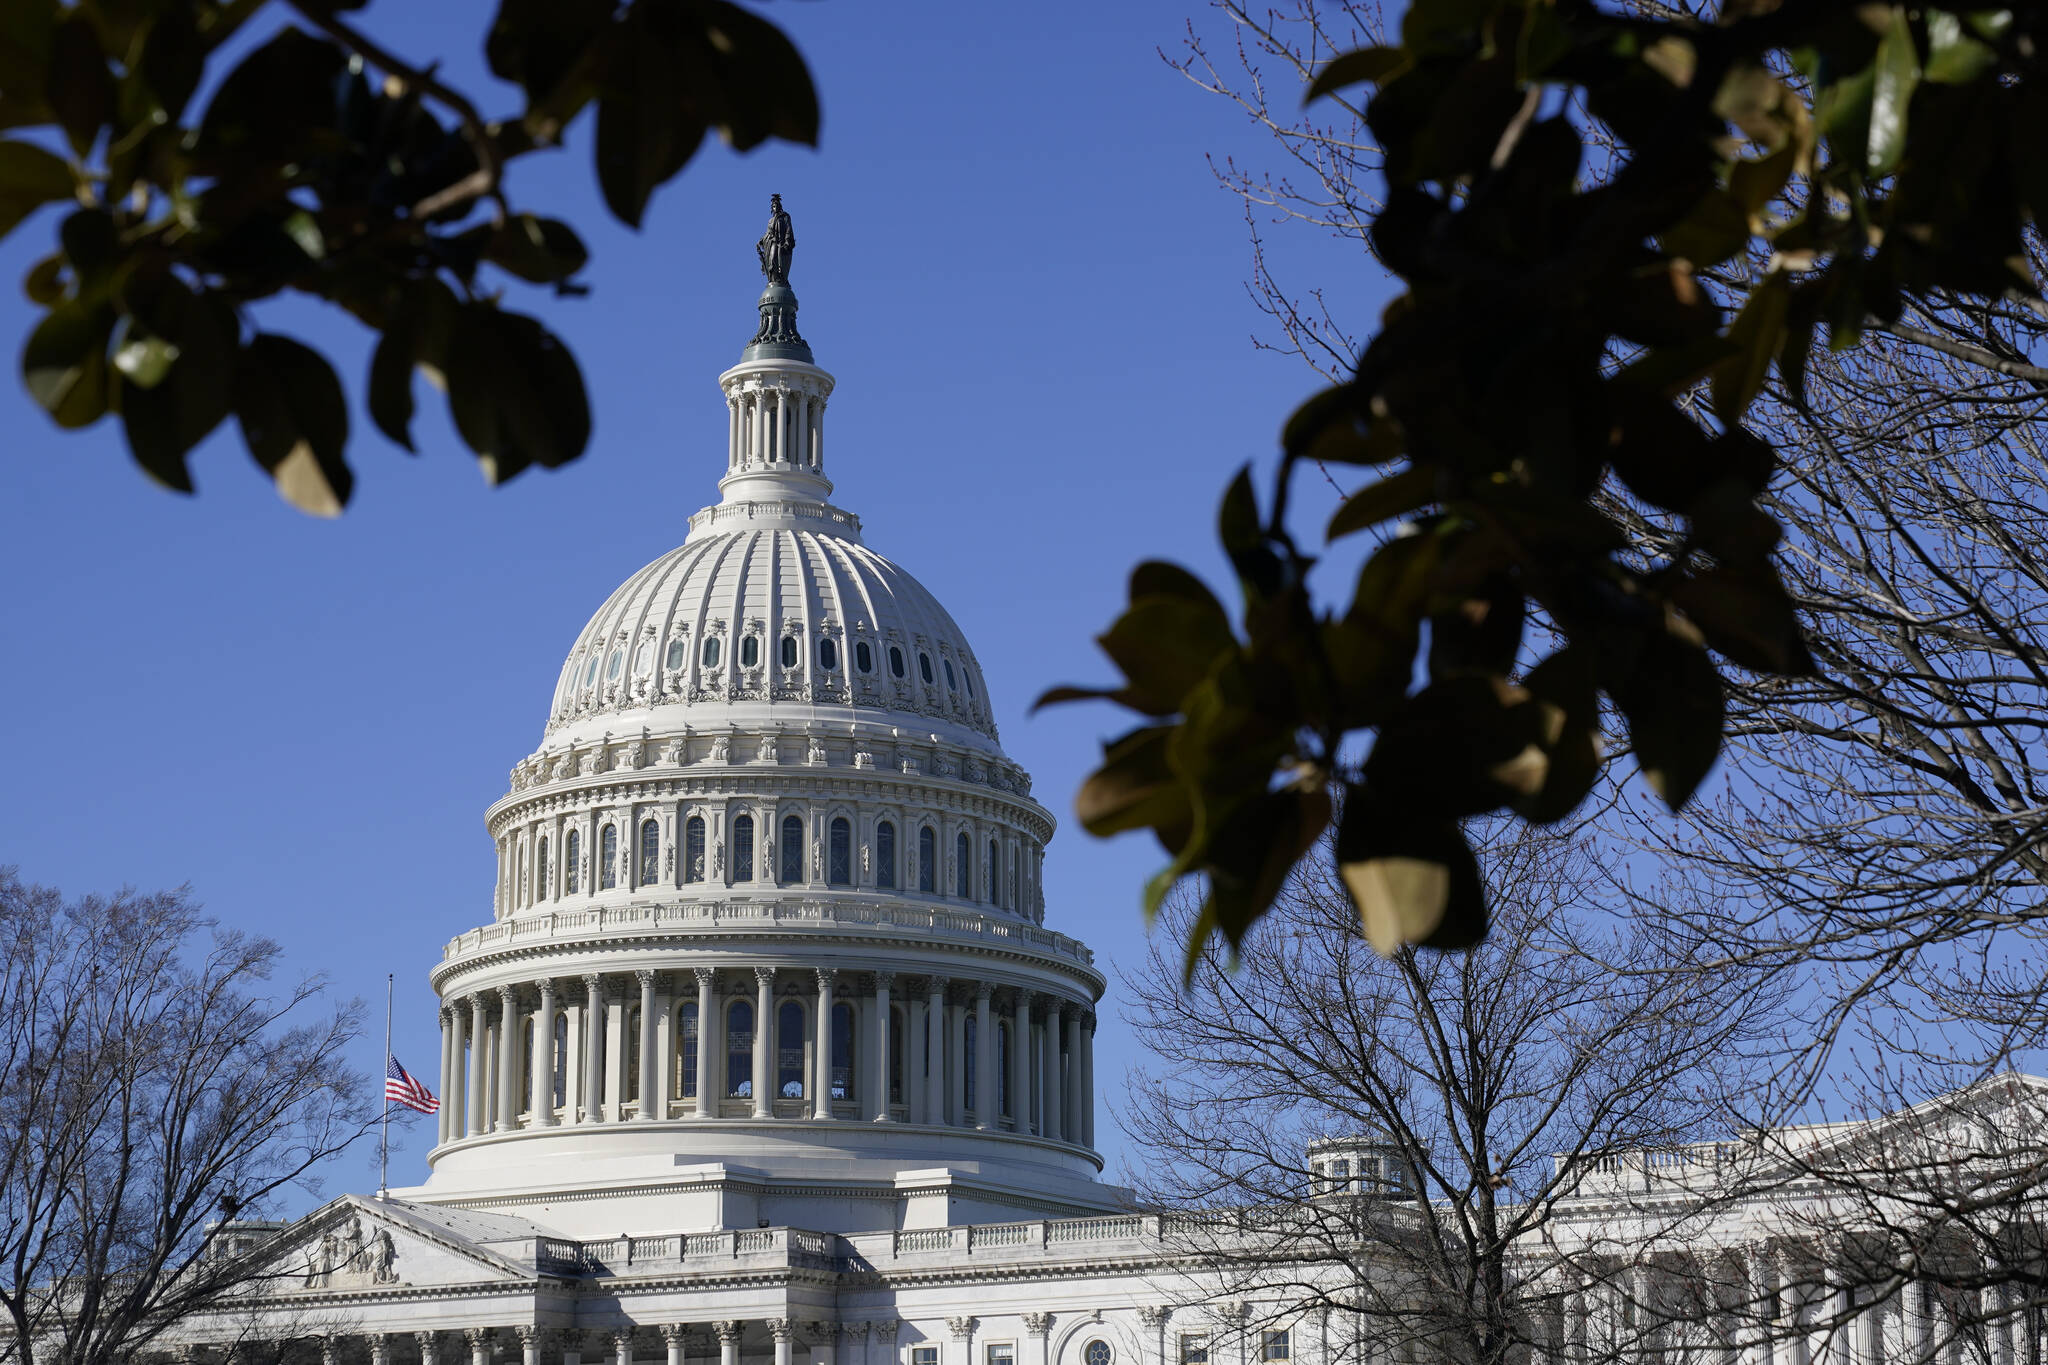 Sunlight shines on the U.S. Capitol dome on Capitol Hill in Washington, Monday, Feb. 21, 2022. (AP Photo/Patrick Semansky)